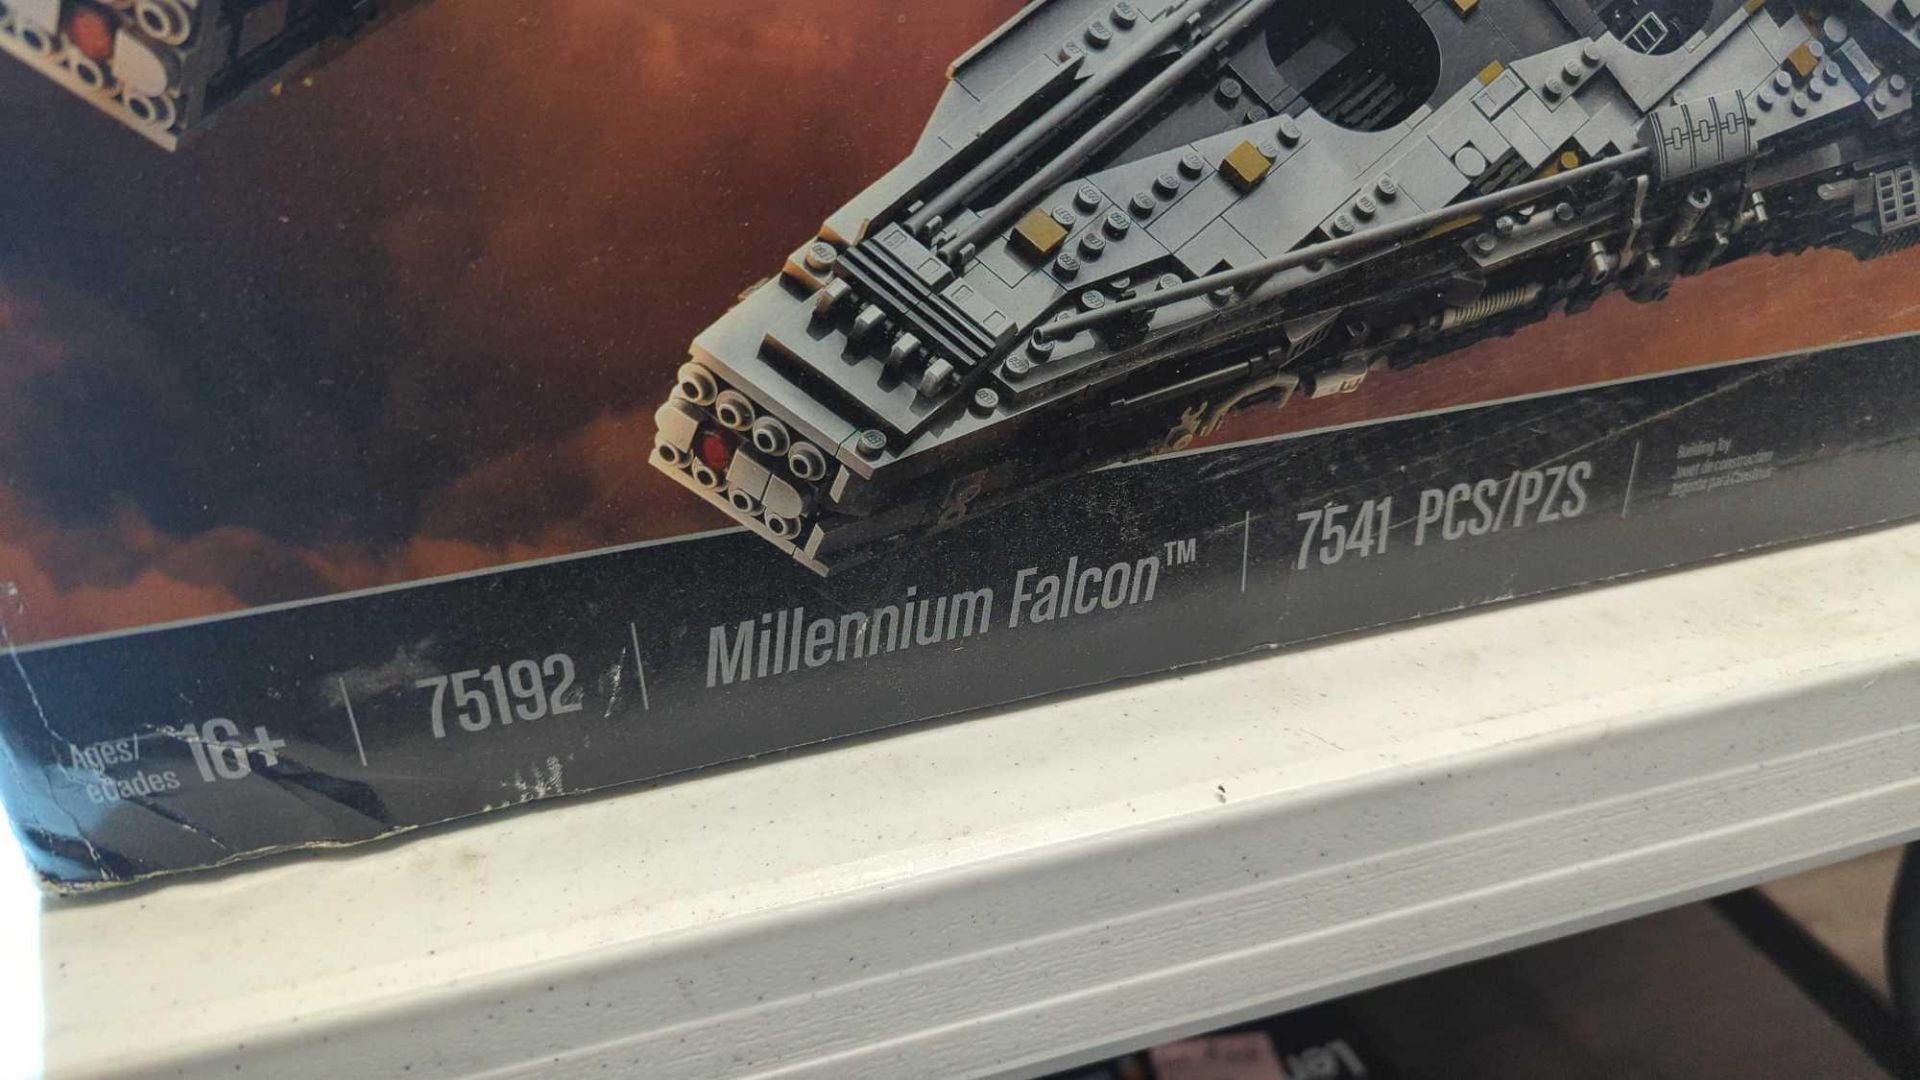 Lego Star Wars Millennium Falcon - Image 2 of 4